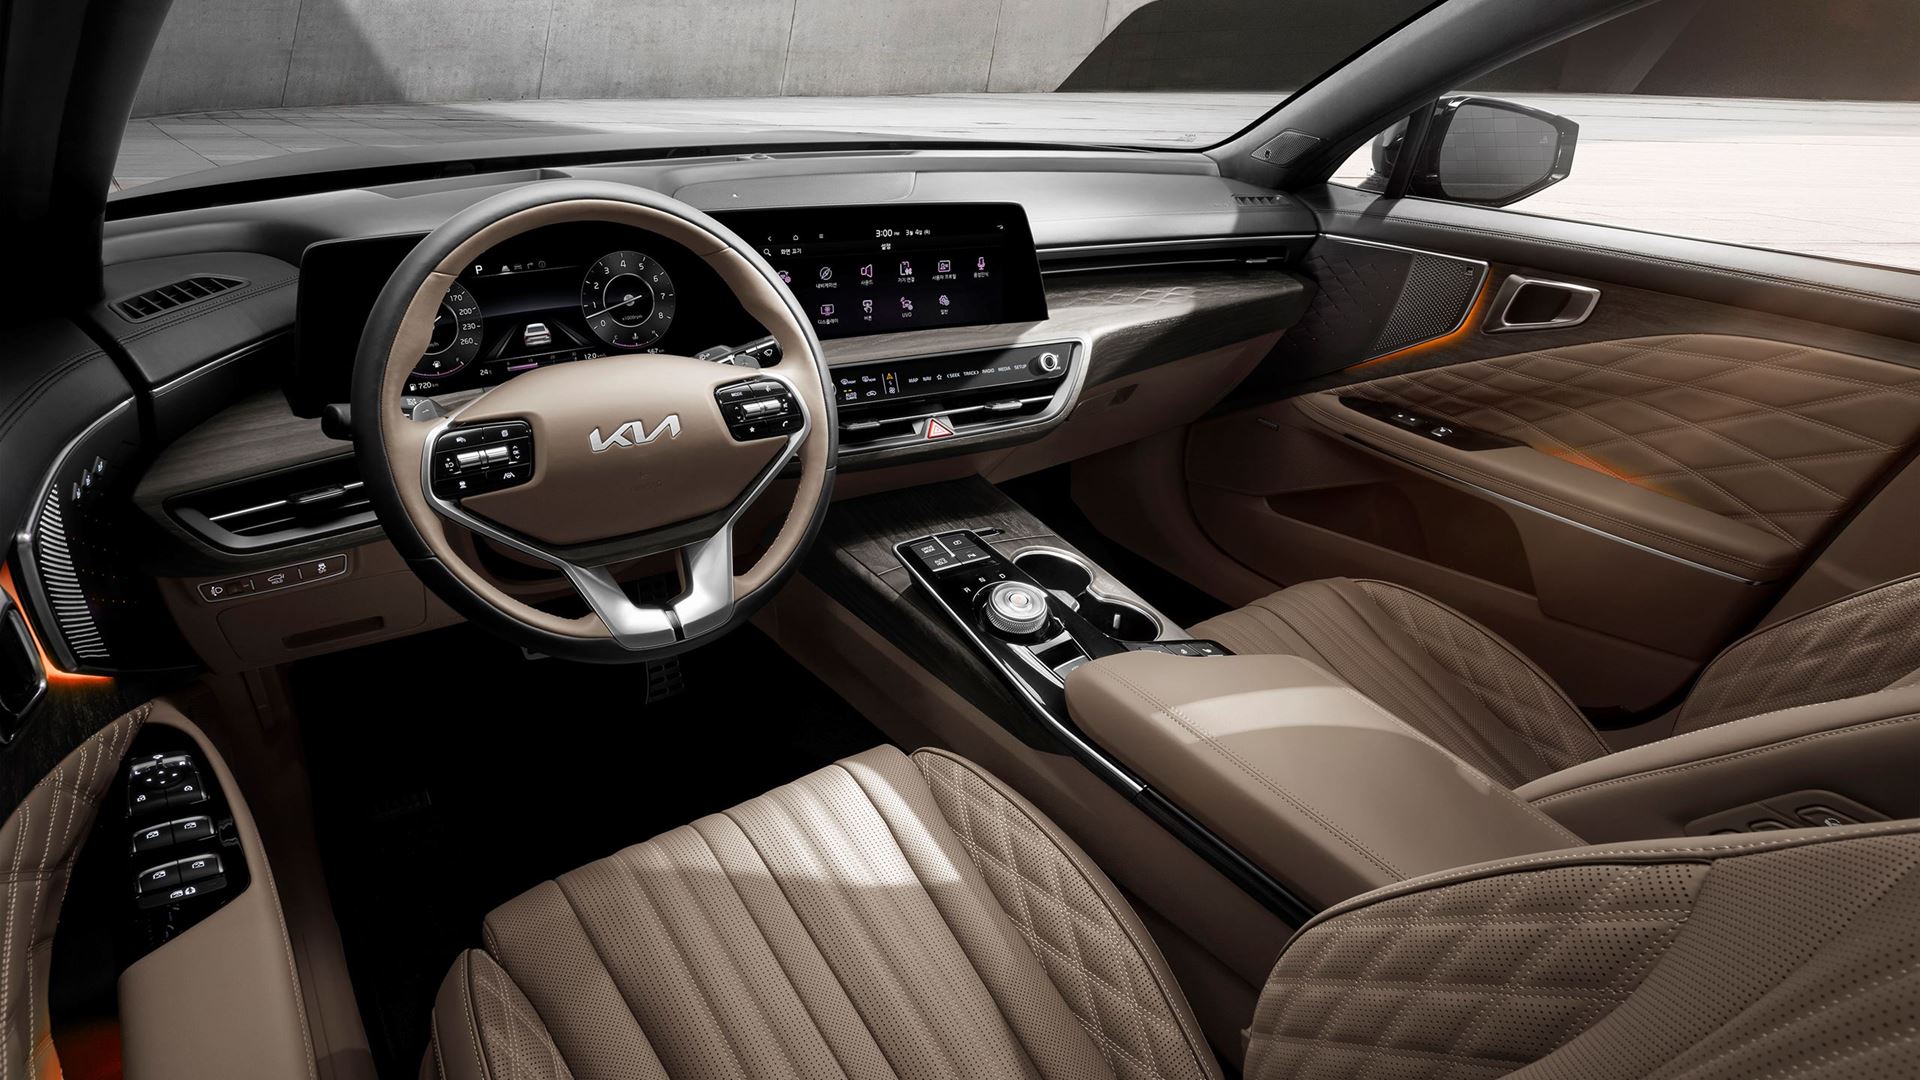 Kia K8 interior modernity and technology meet in a luxury sports sedan